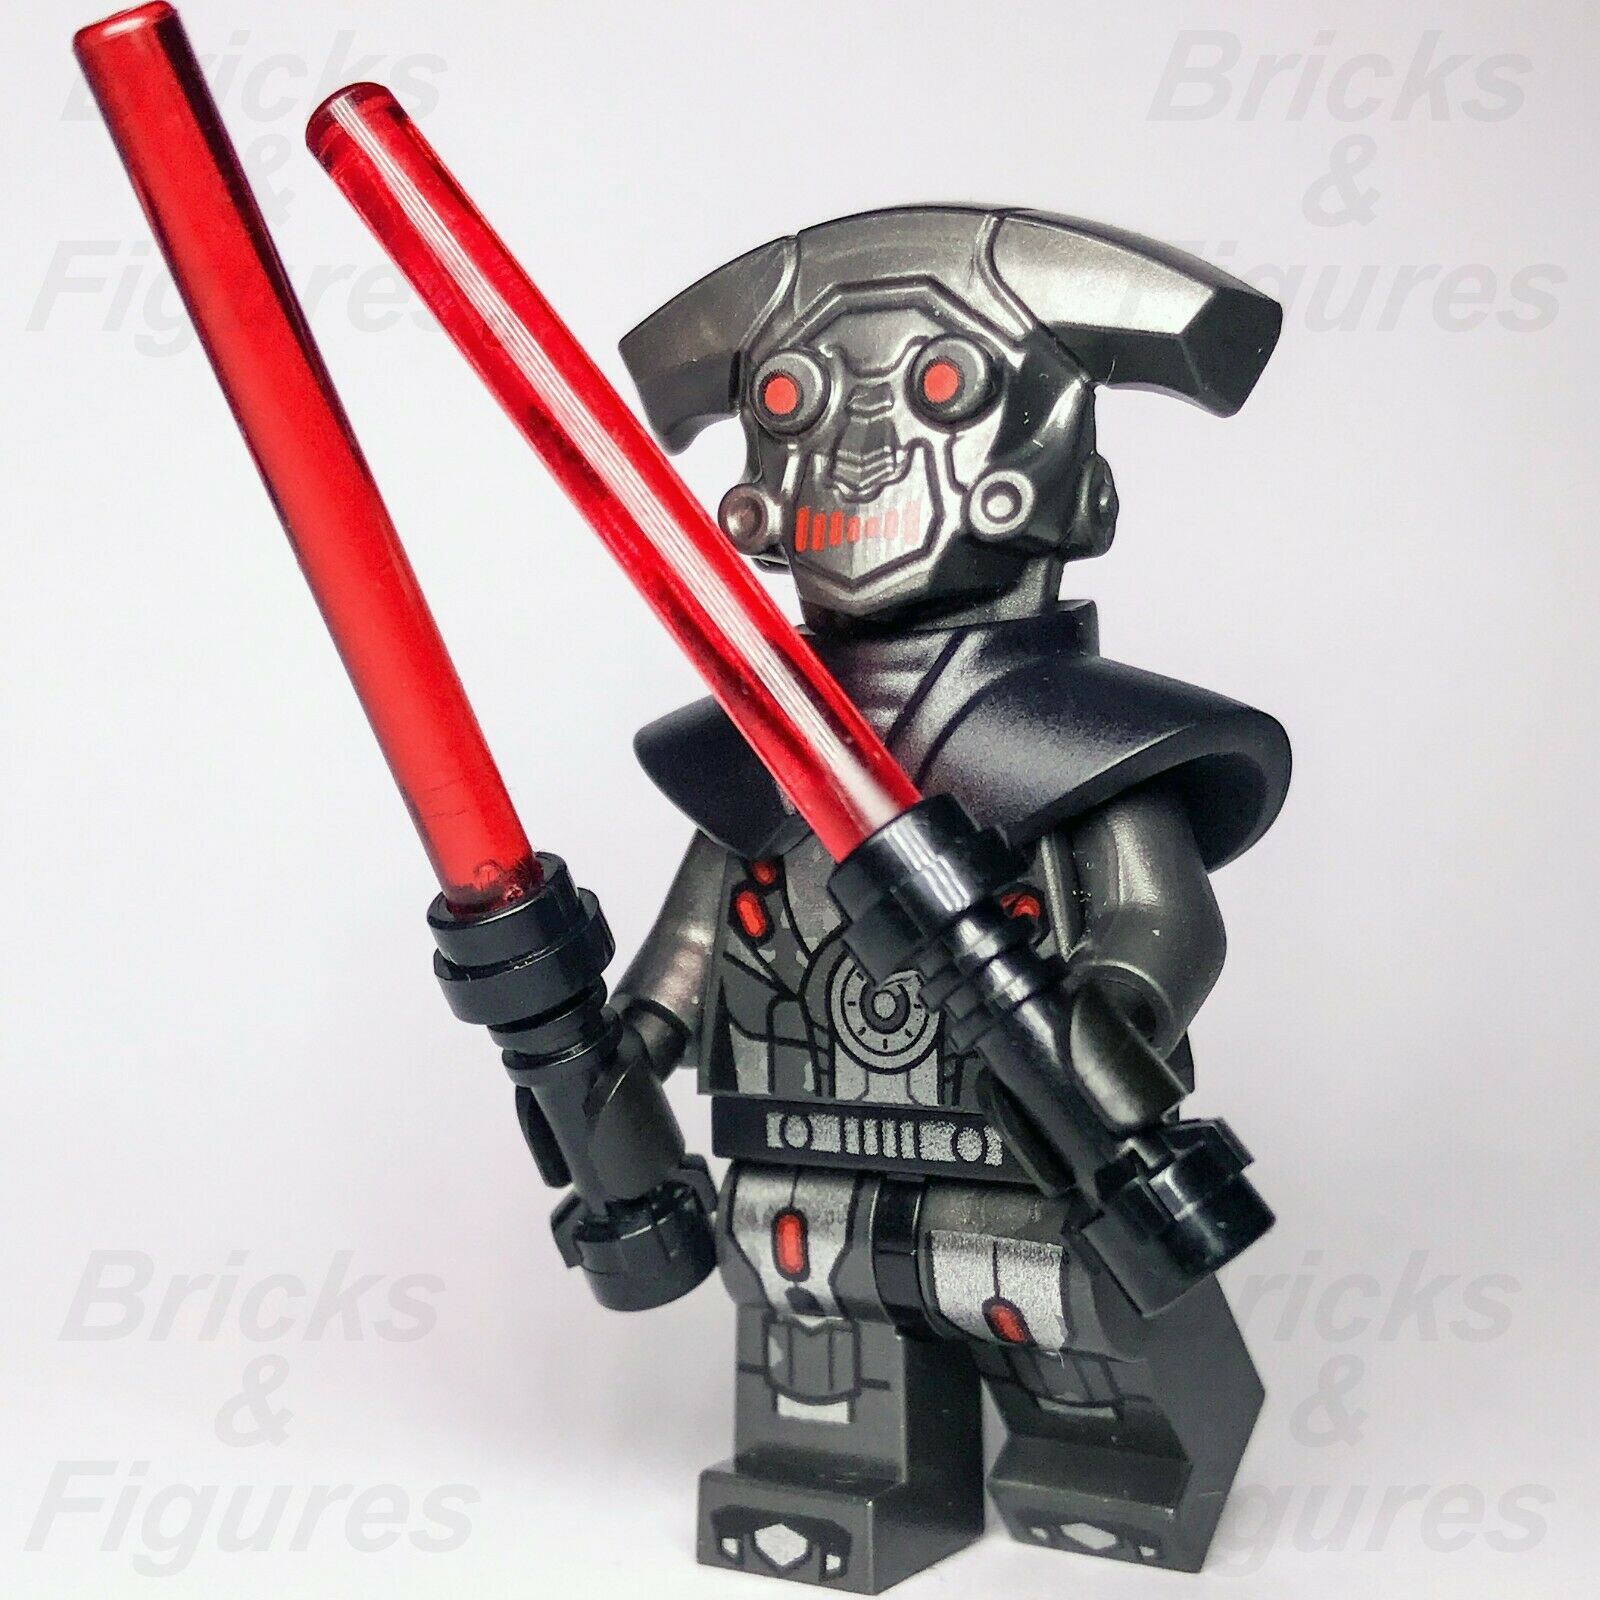 New Star Wars LEGO M-OC Hunter Droid The Freemaker Adventures Minifigure 75185 - Bricks & Figures